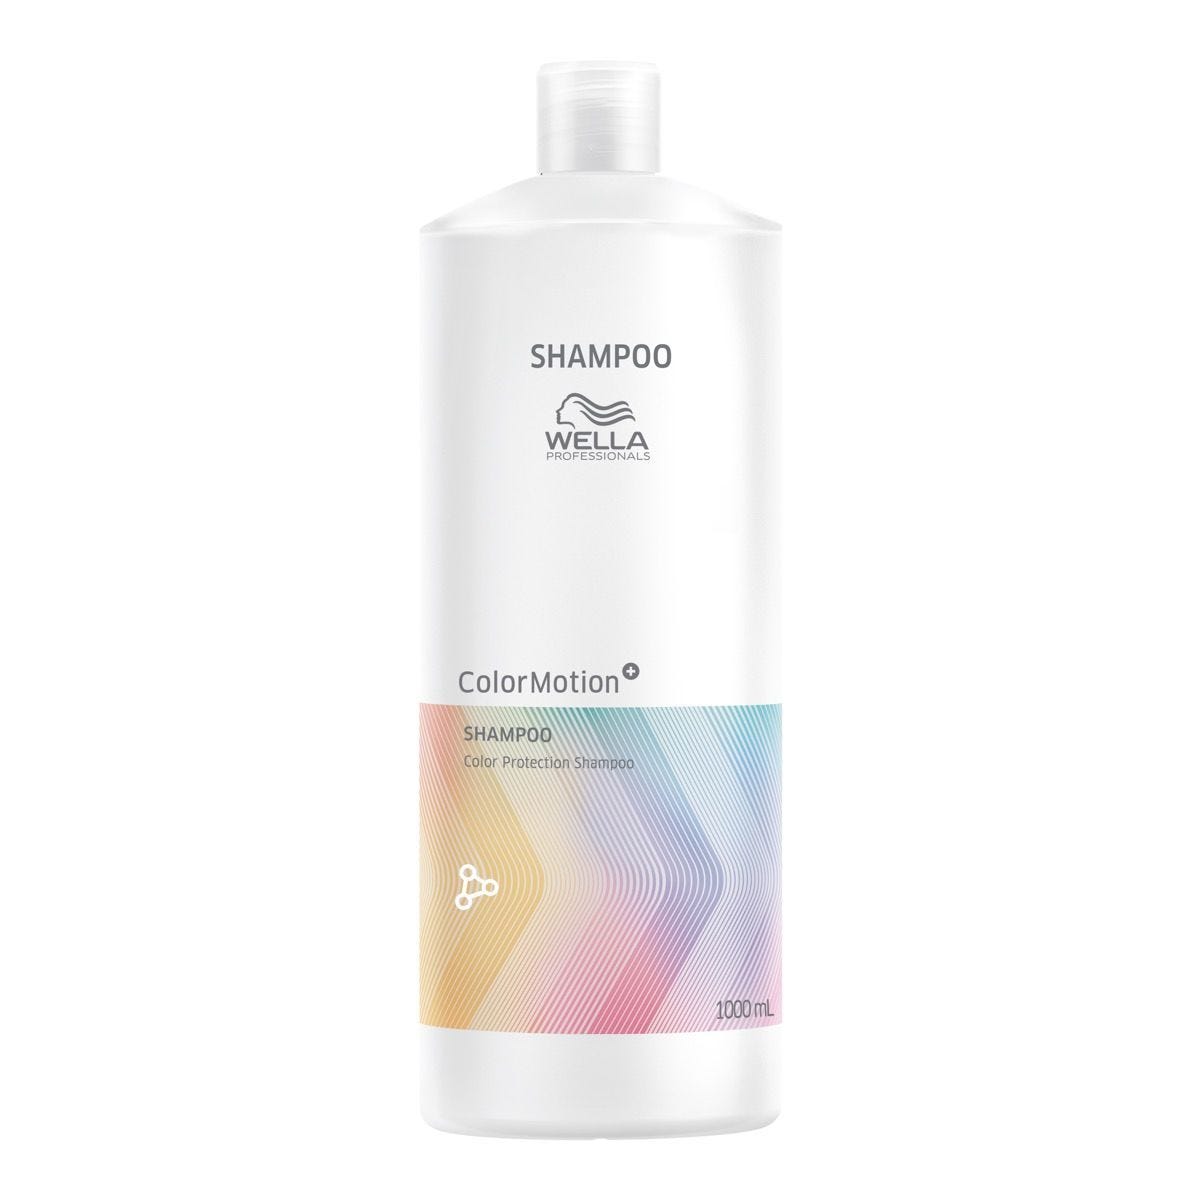 ColorMotion Shampoo 1000ml